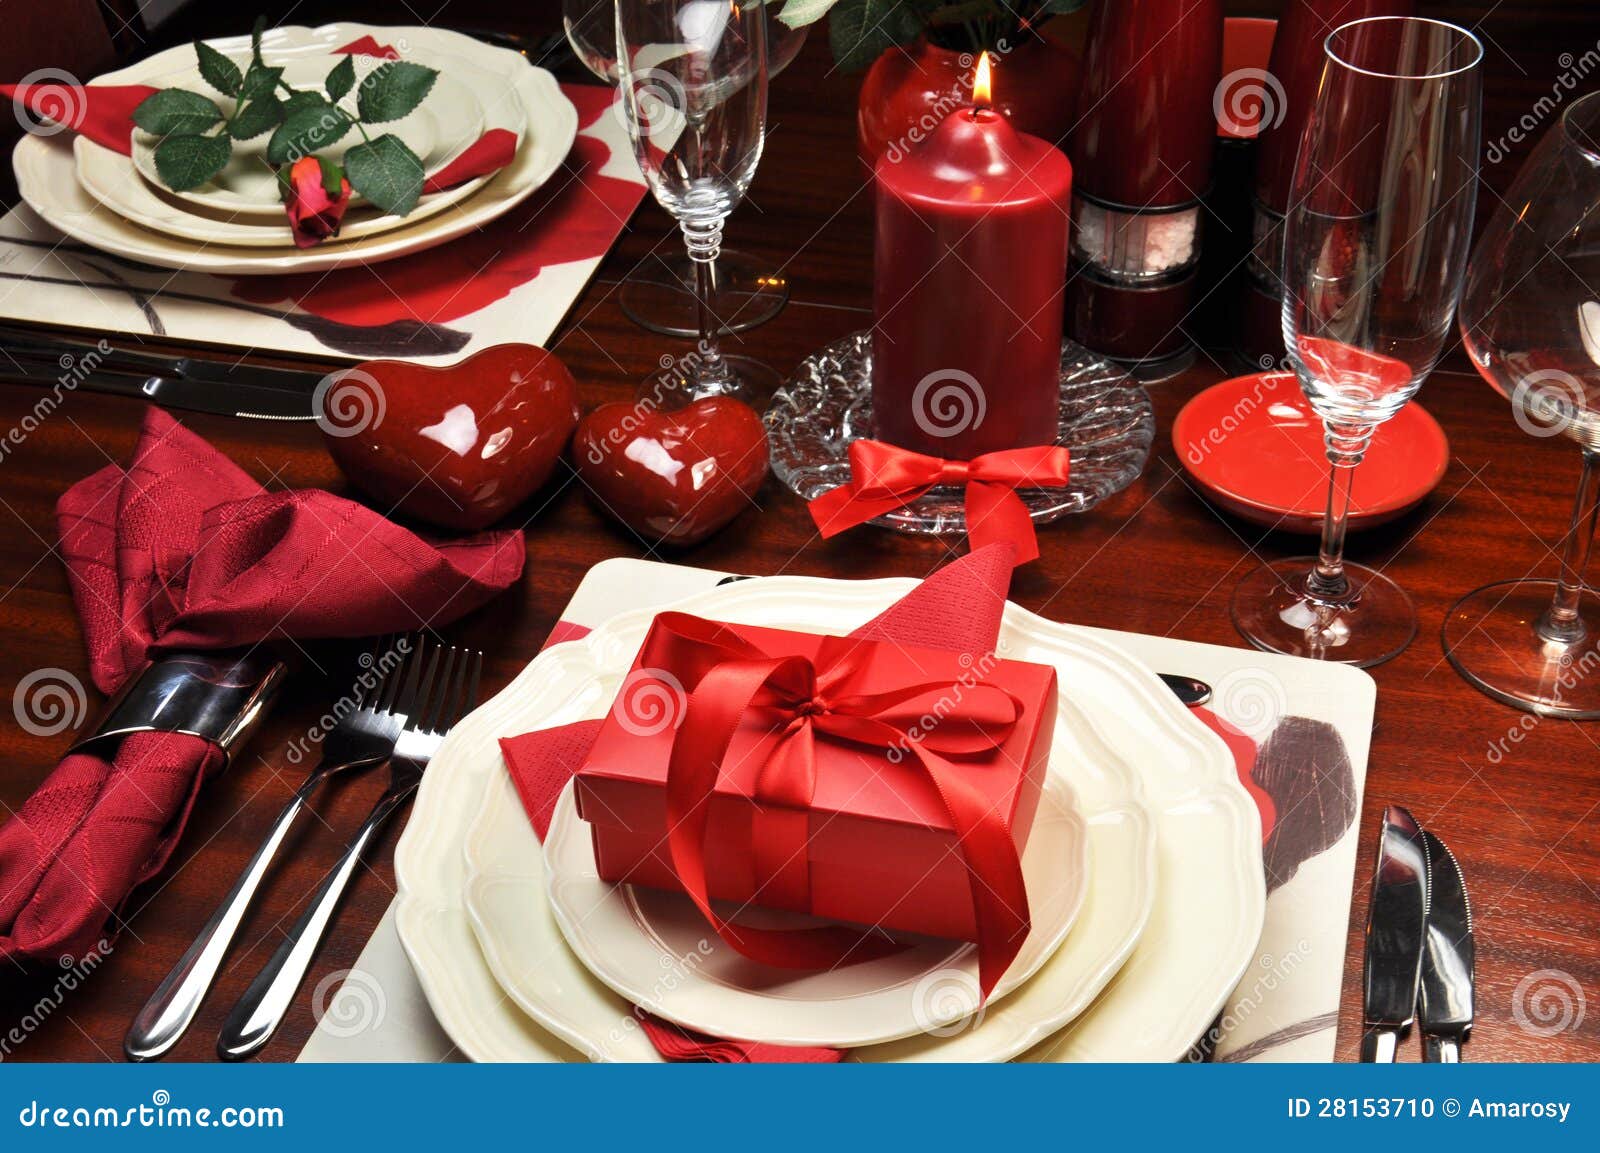 romantic valentine dinner for two